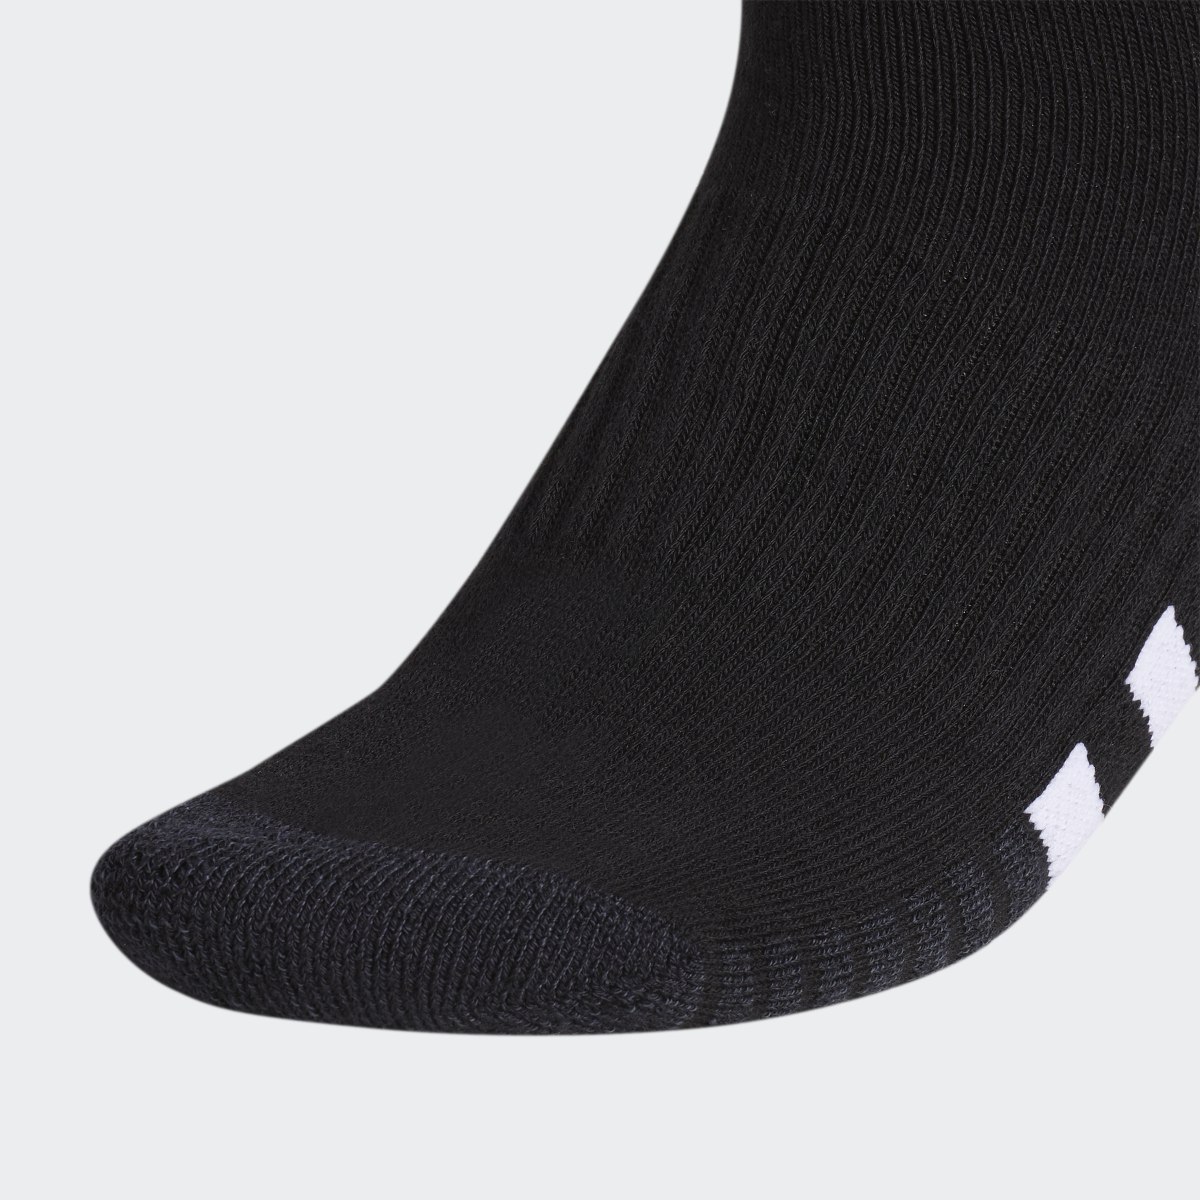 Adidas Cushioned Quarter Socks 3 Pairs. 4